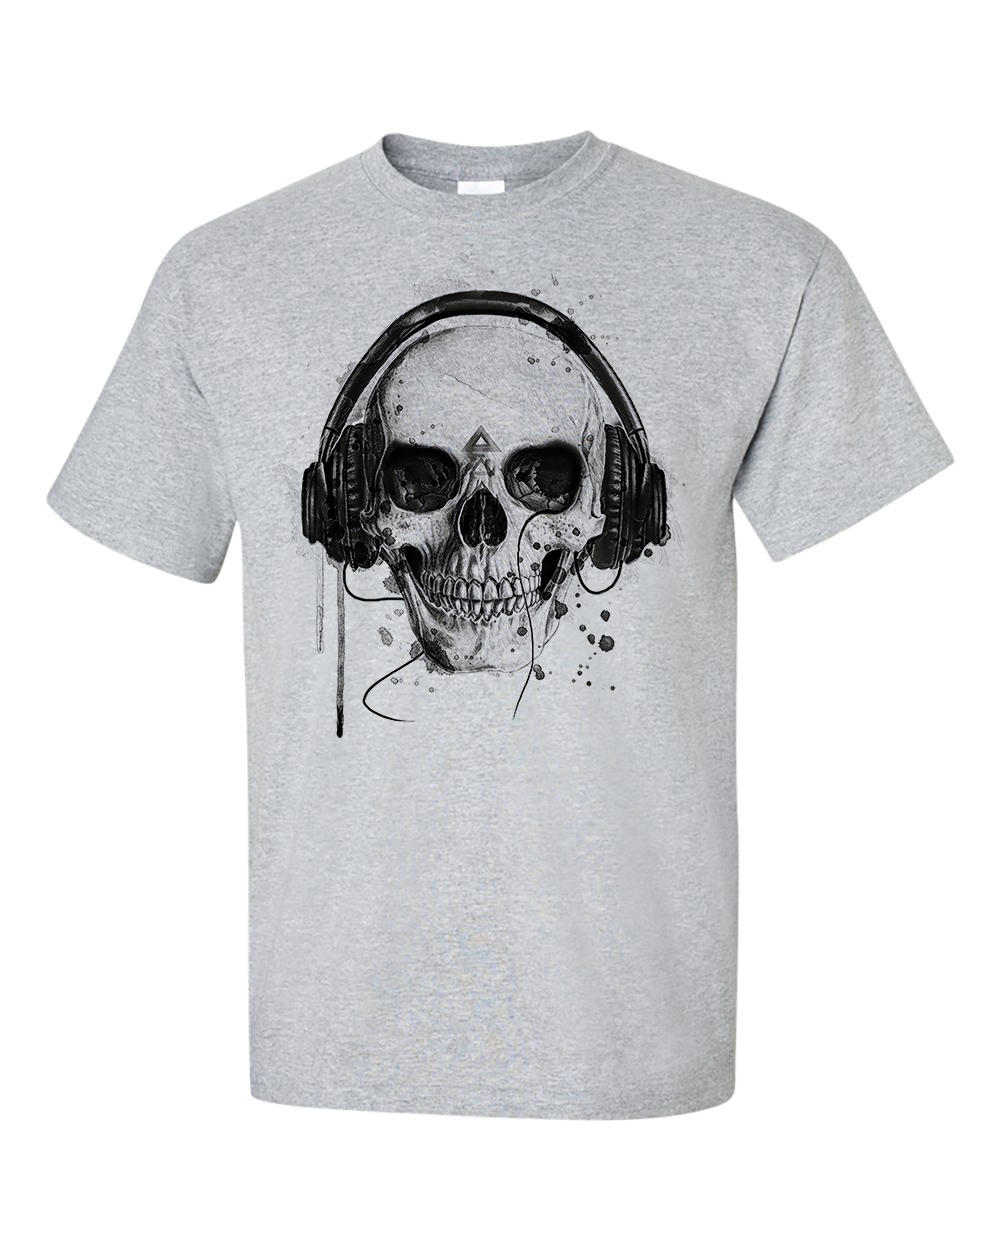 Skull With Headphones Music T-Shirt